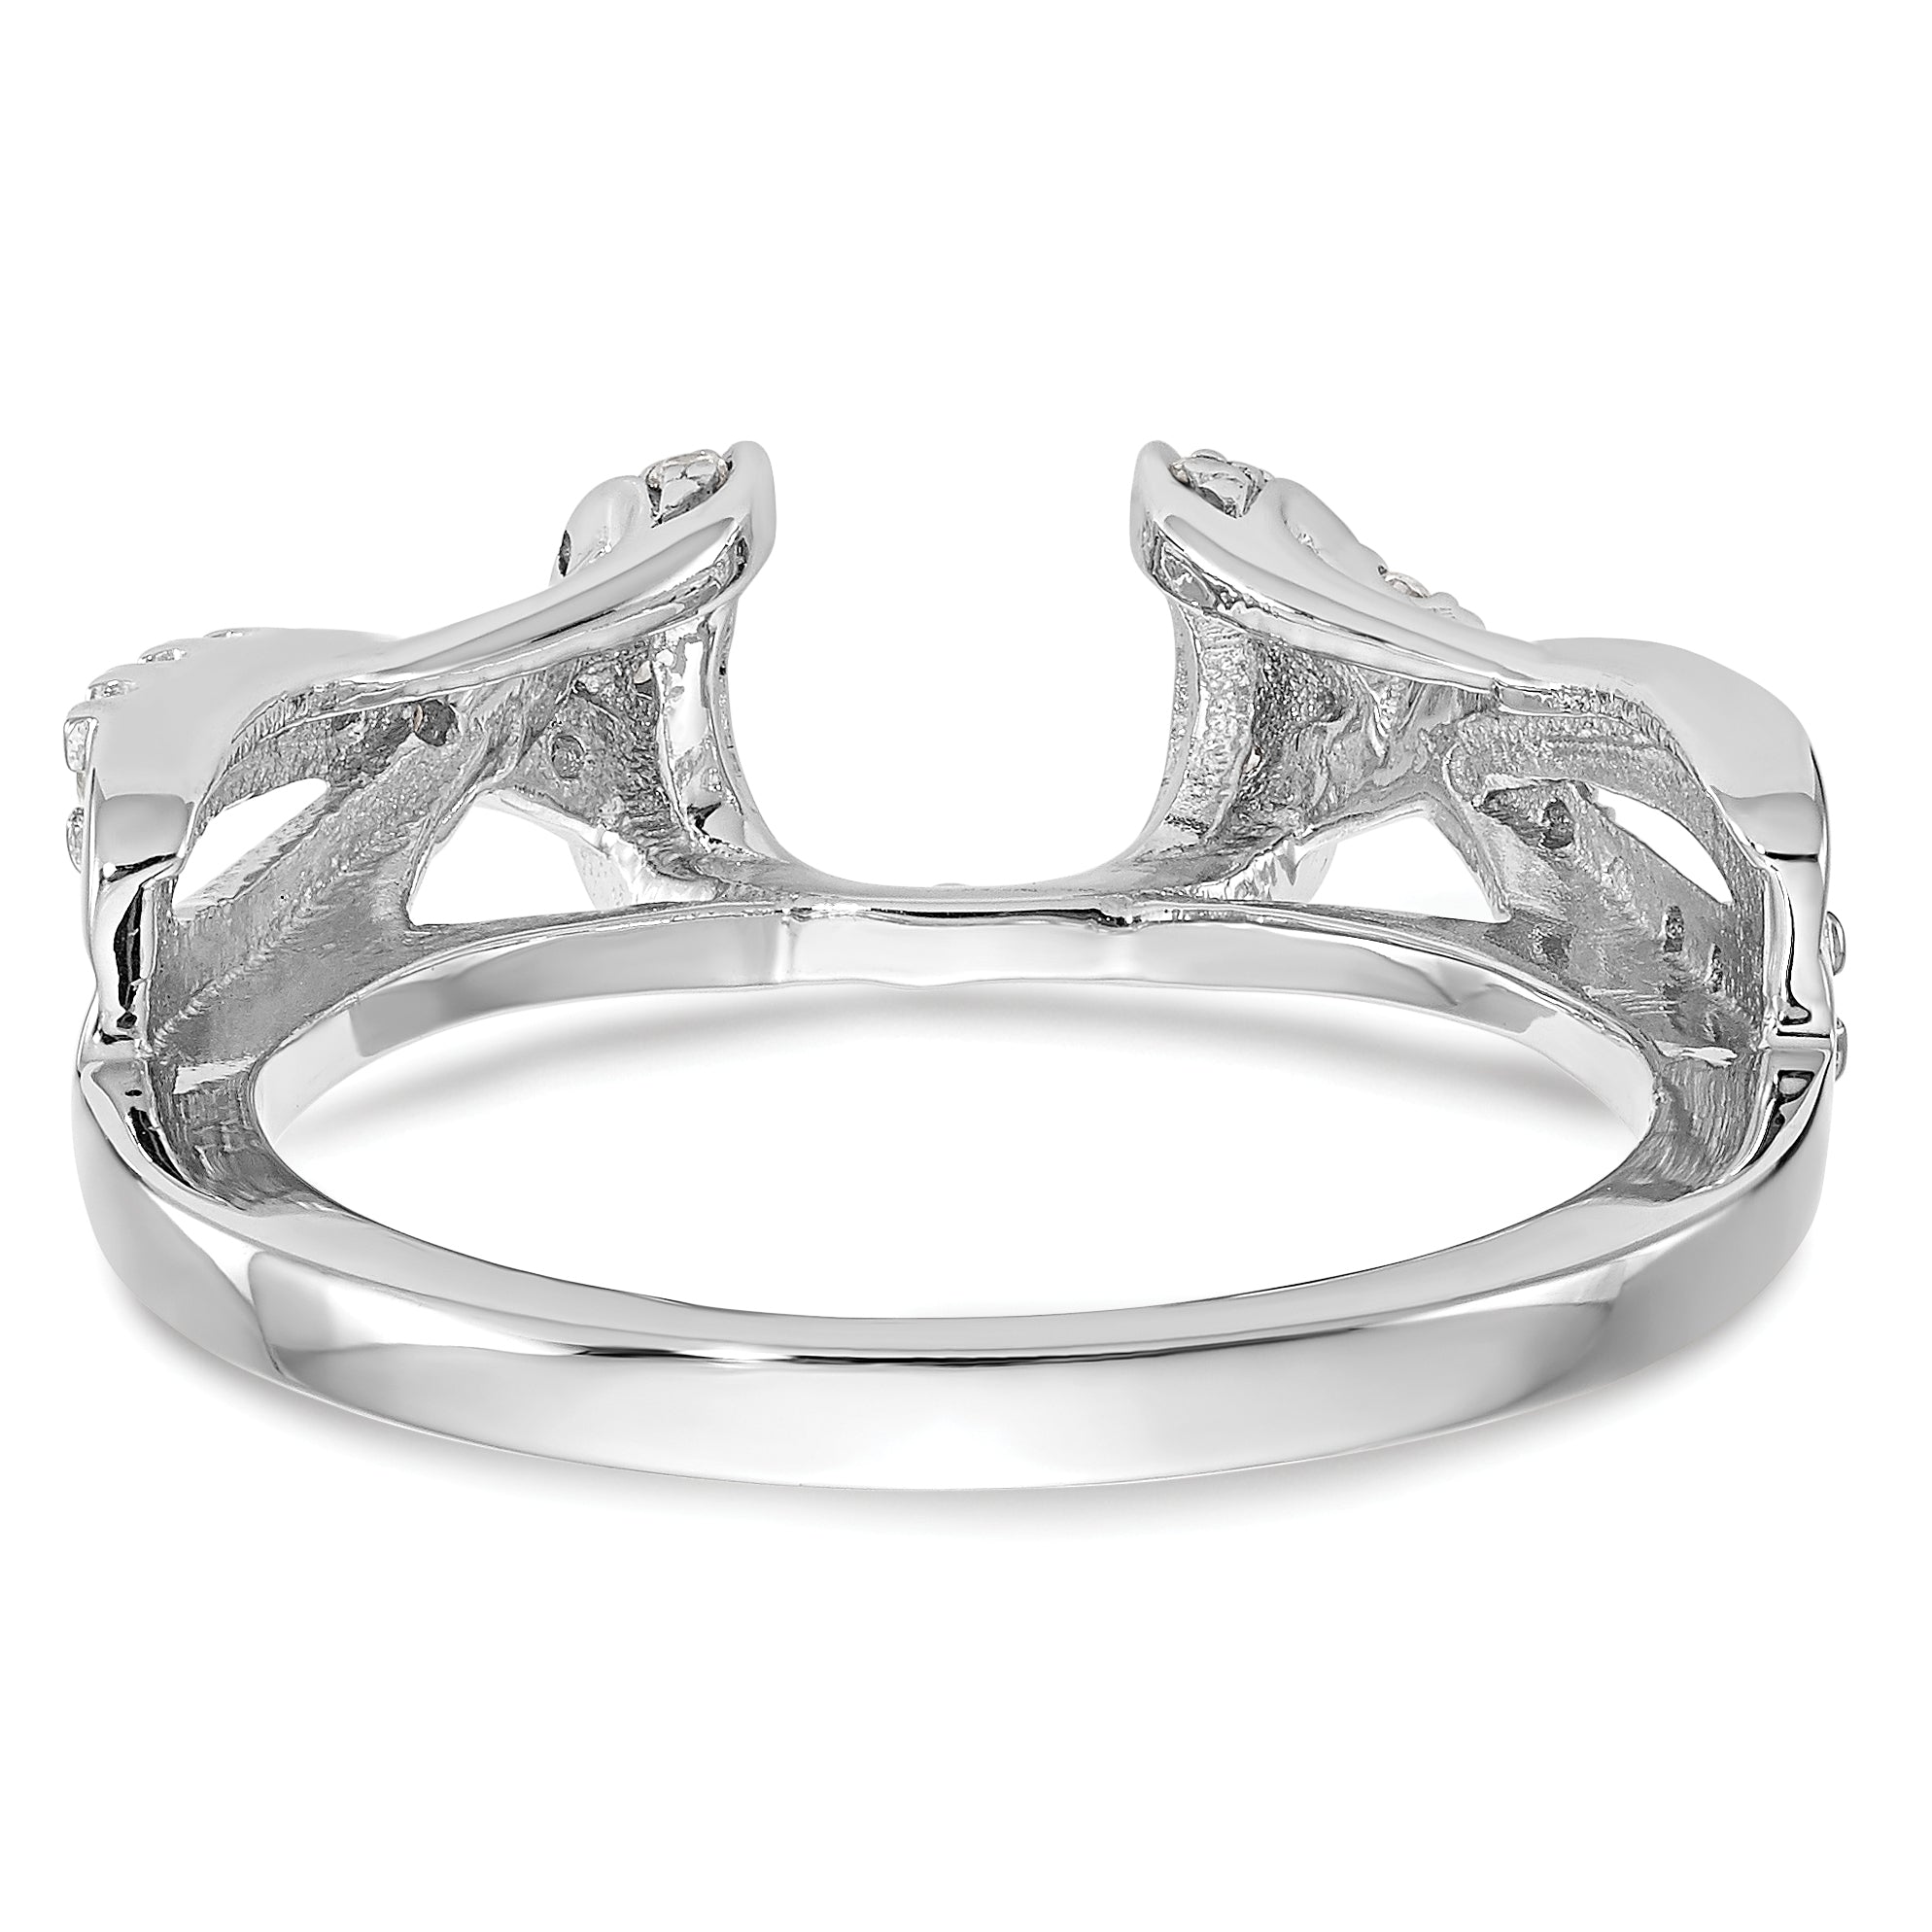 14K White Gold Criss-Cross 1/4 carat Diamond Complete Wrap Ring